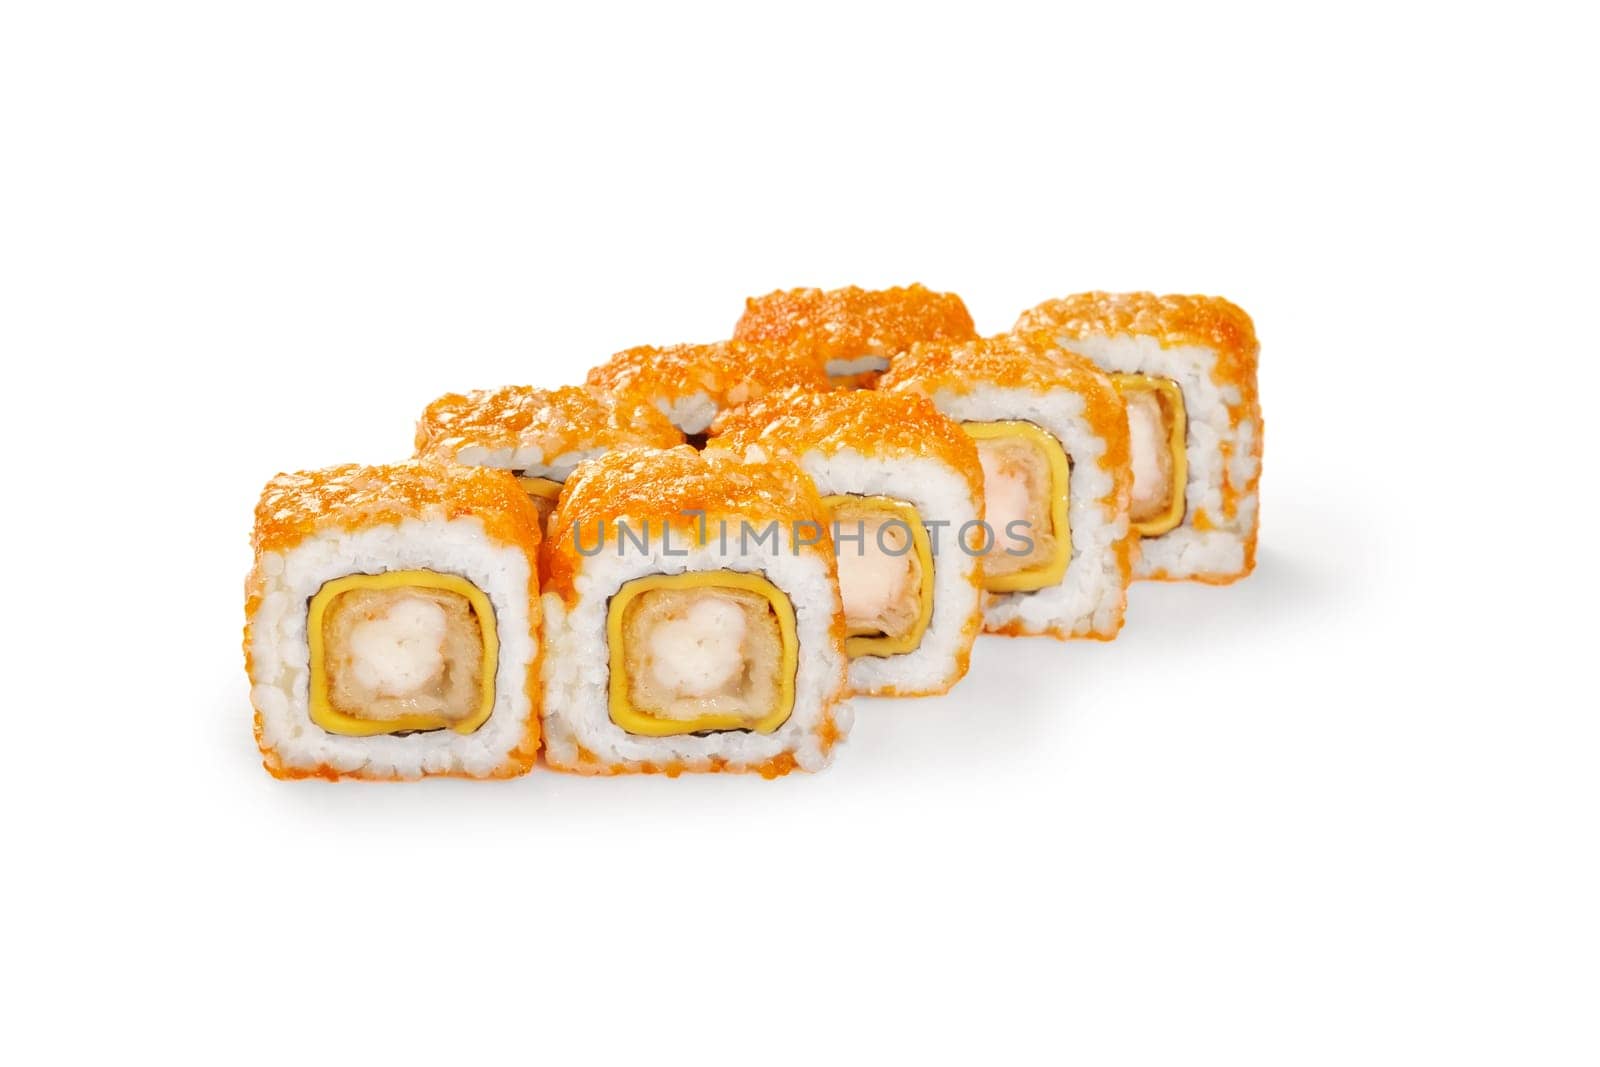 Tobiko coated sushi rolls with tempura shrimp and cheddar by nazarovsergey